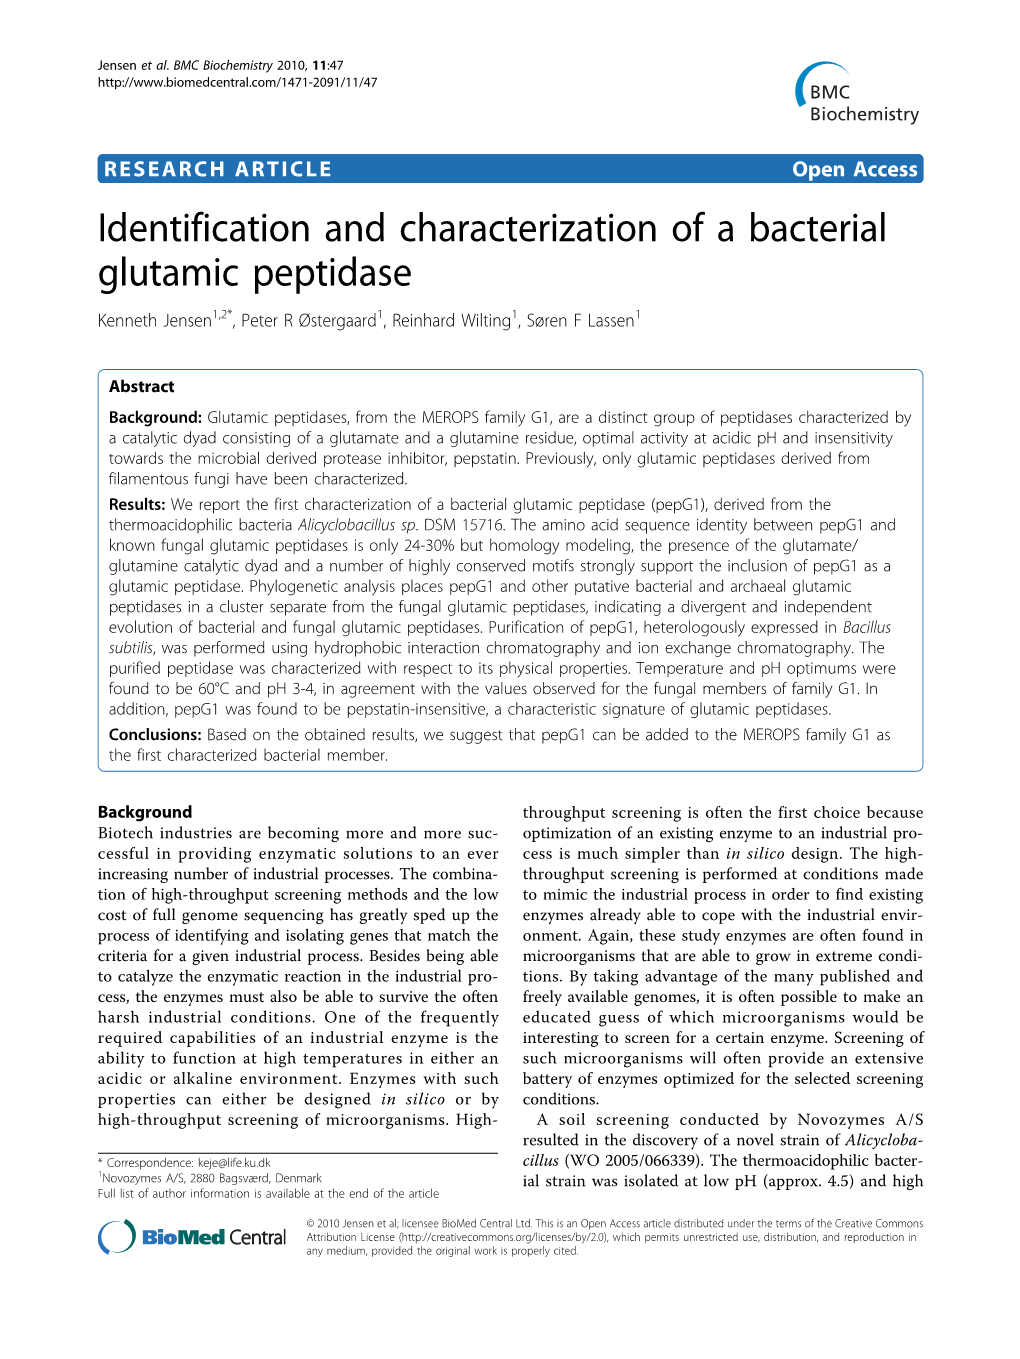 Identification and Characterization of a Bacterial Glutamic Peptidase Kenneth Jensen1,2*, Peter R Østergaard1, Reinhard Wilting1, Søren F Lassen1